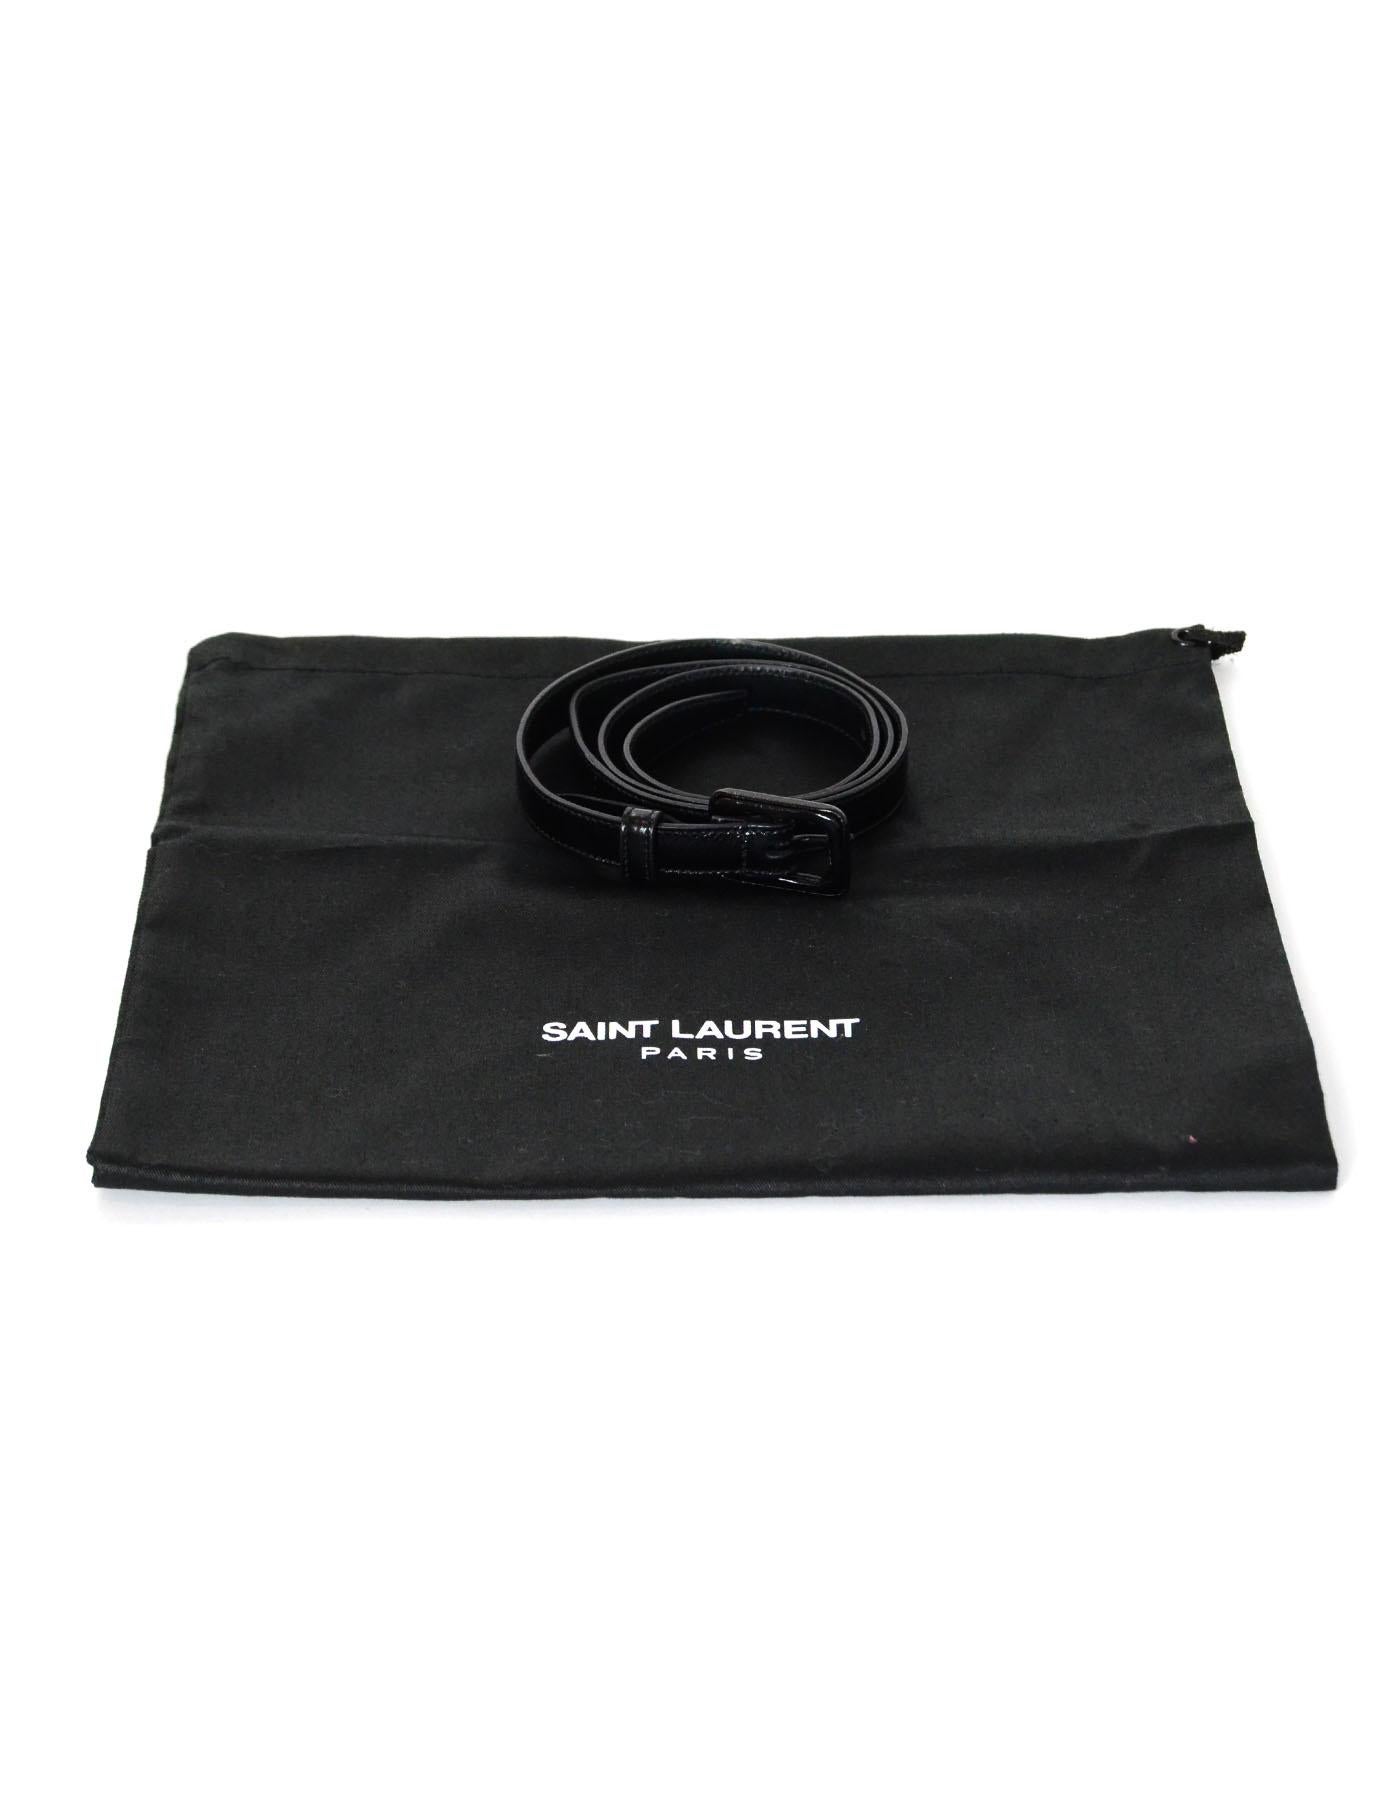 Saint Laurent Black Glazed Crinkled Leather Skinny Belt sz 75cm/30